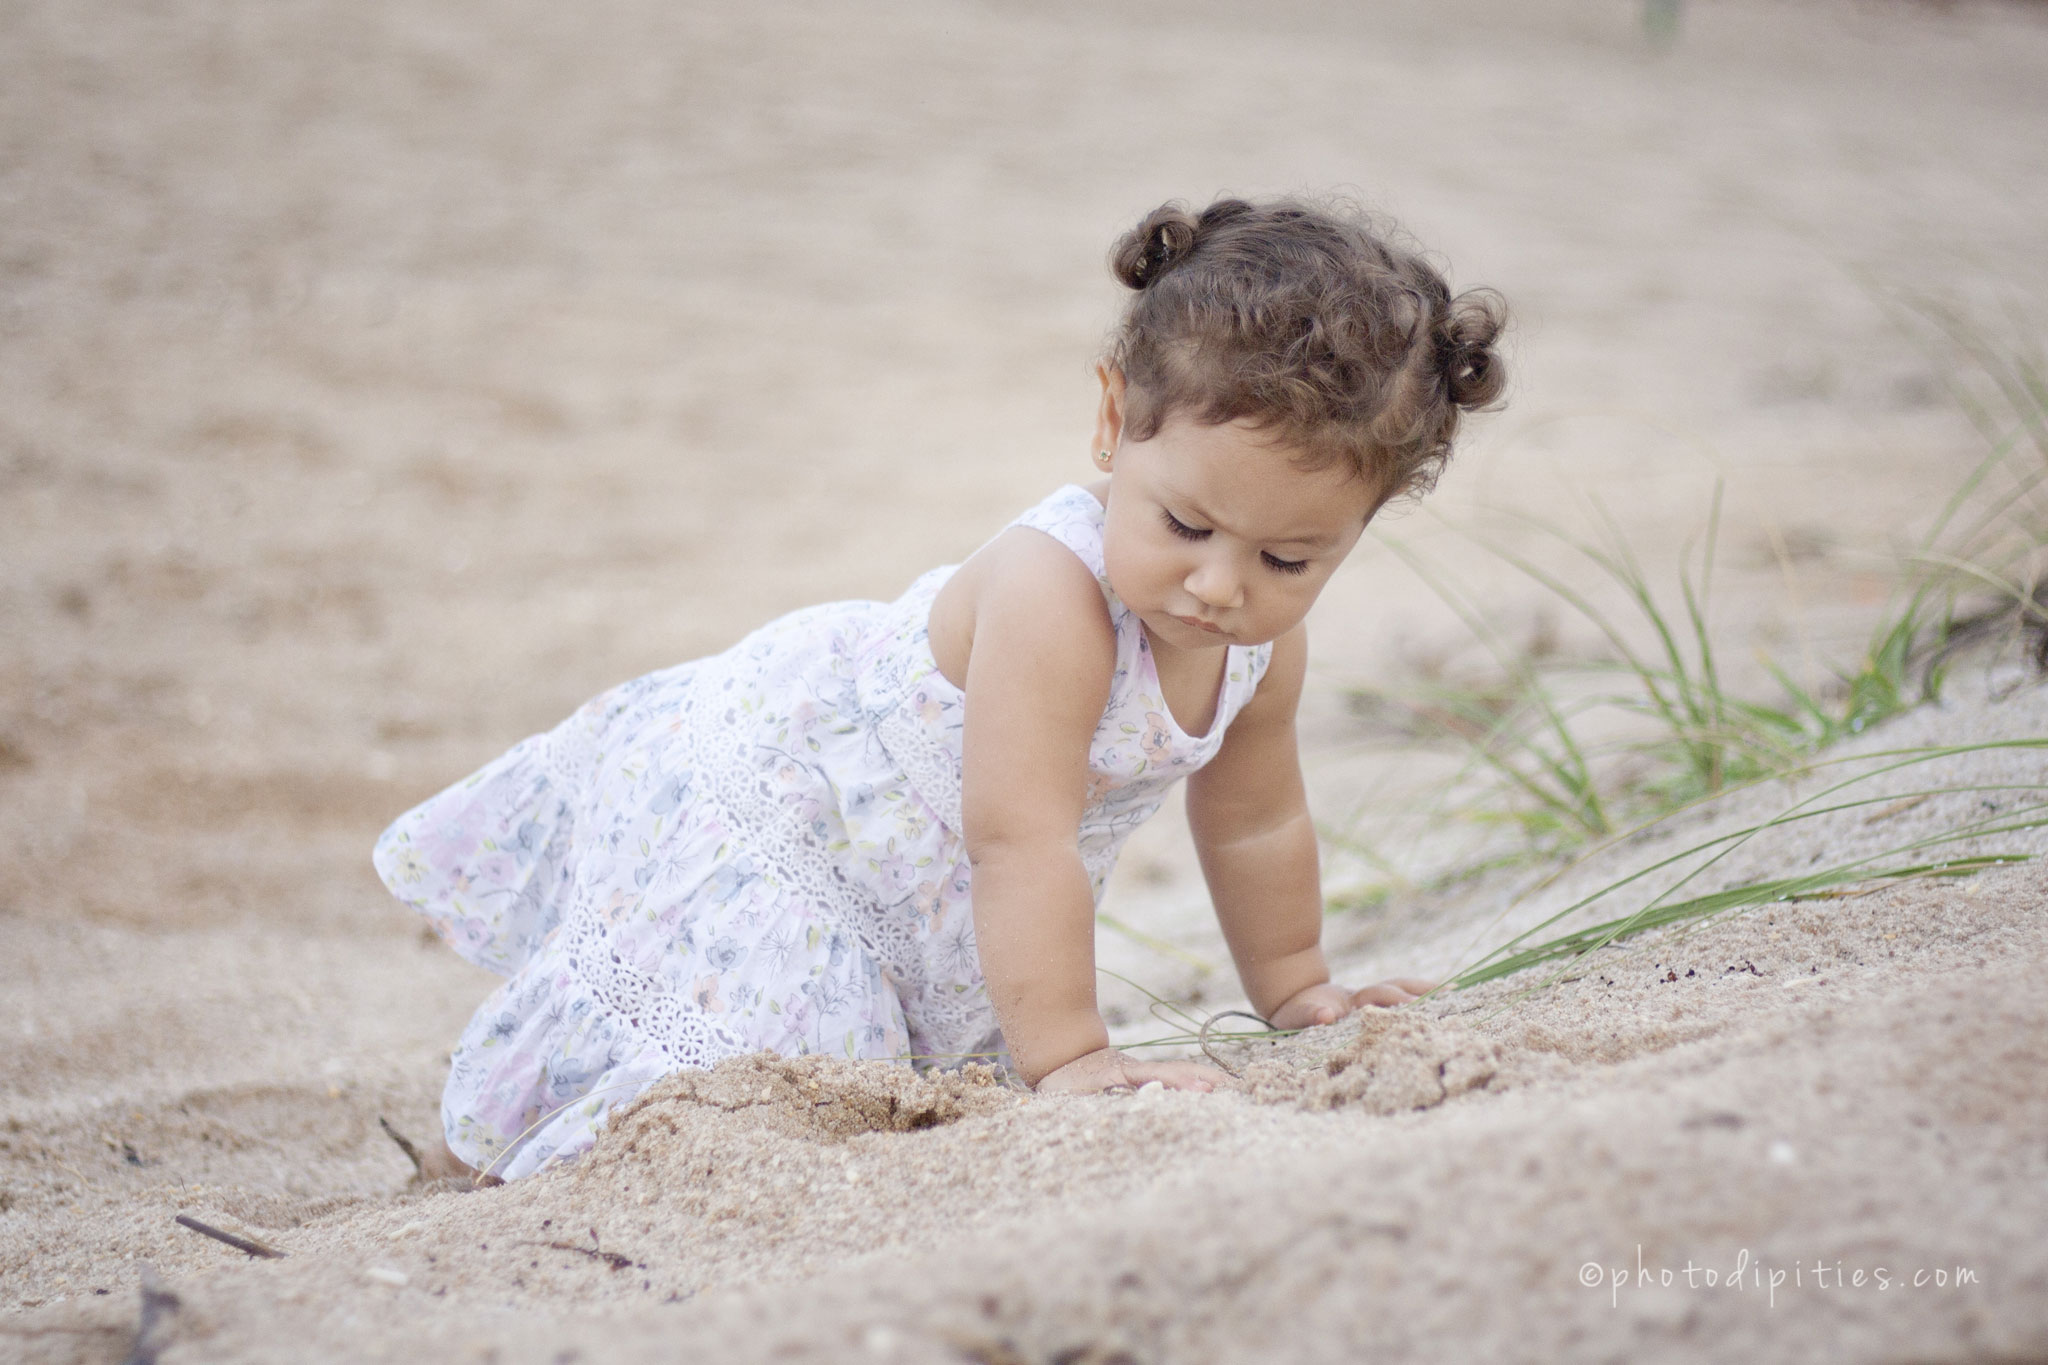 Photodipities Family | Children Beach Photography